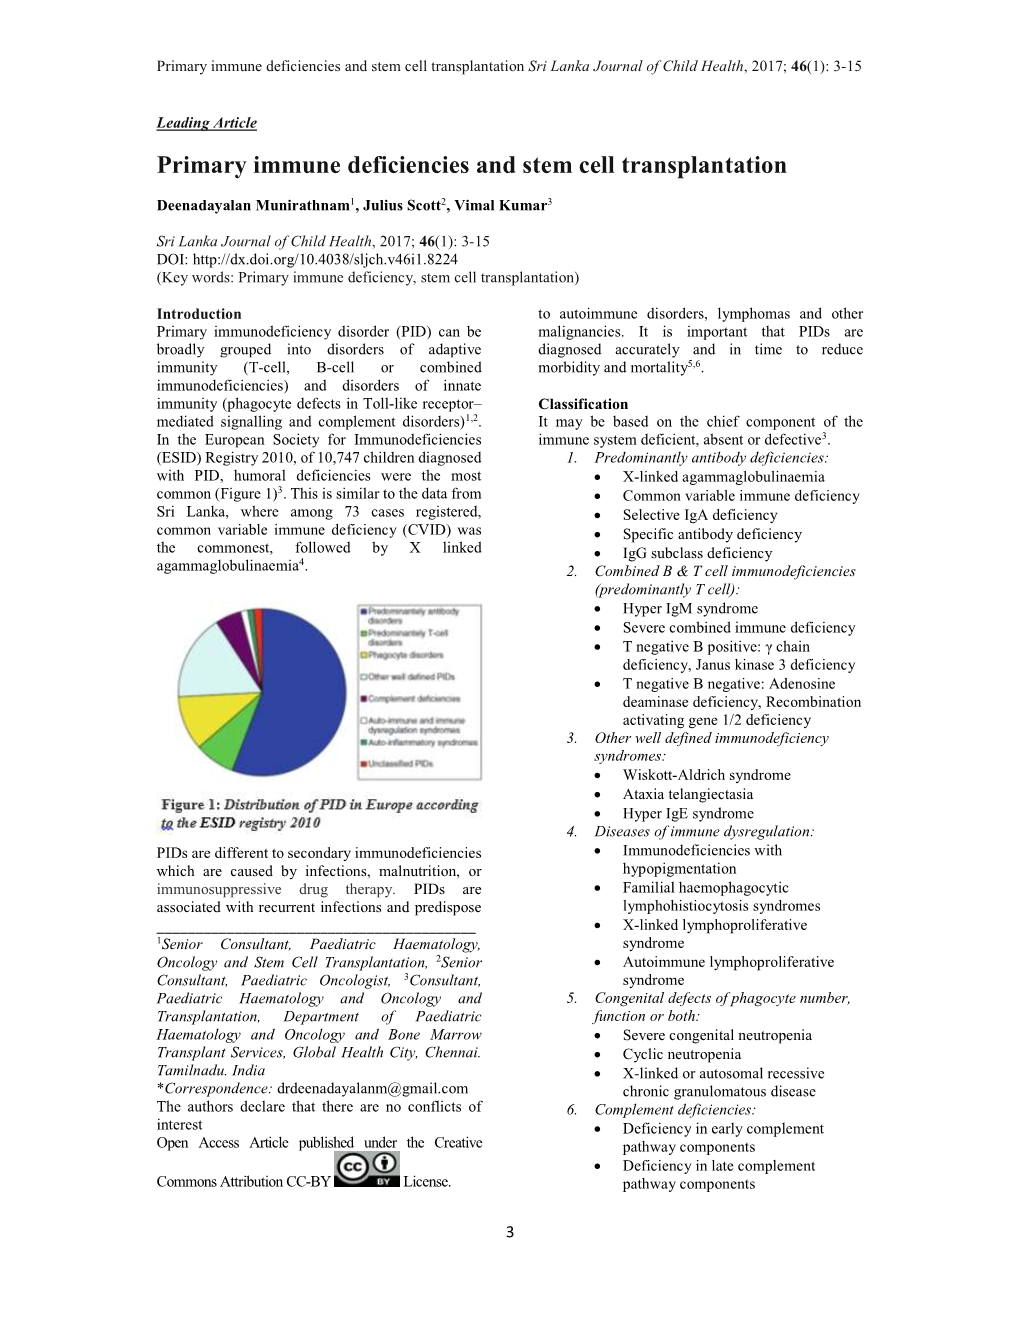 Primary Immune Deficiencies and Stem Cell Transplantation Sri Lanka Journal of Child Health , 2017; 46 (1): 3-15